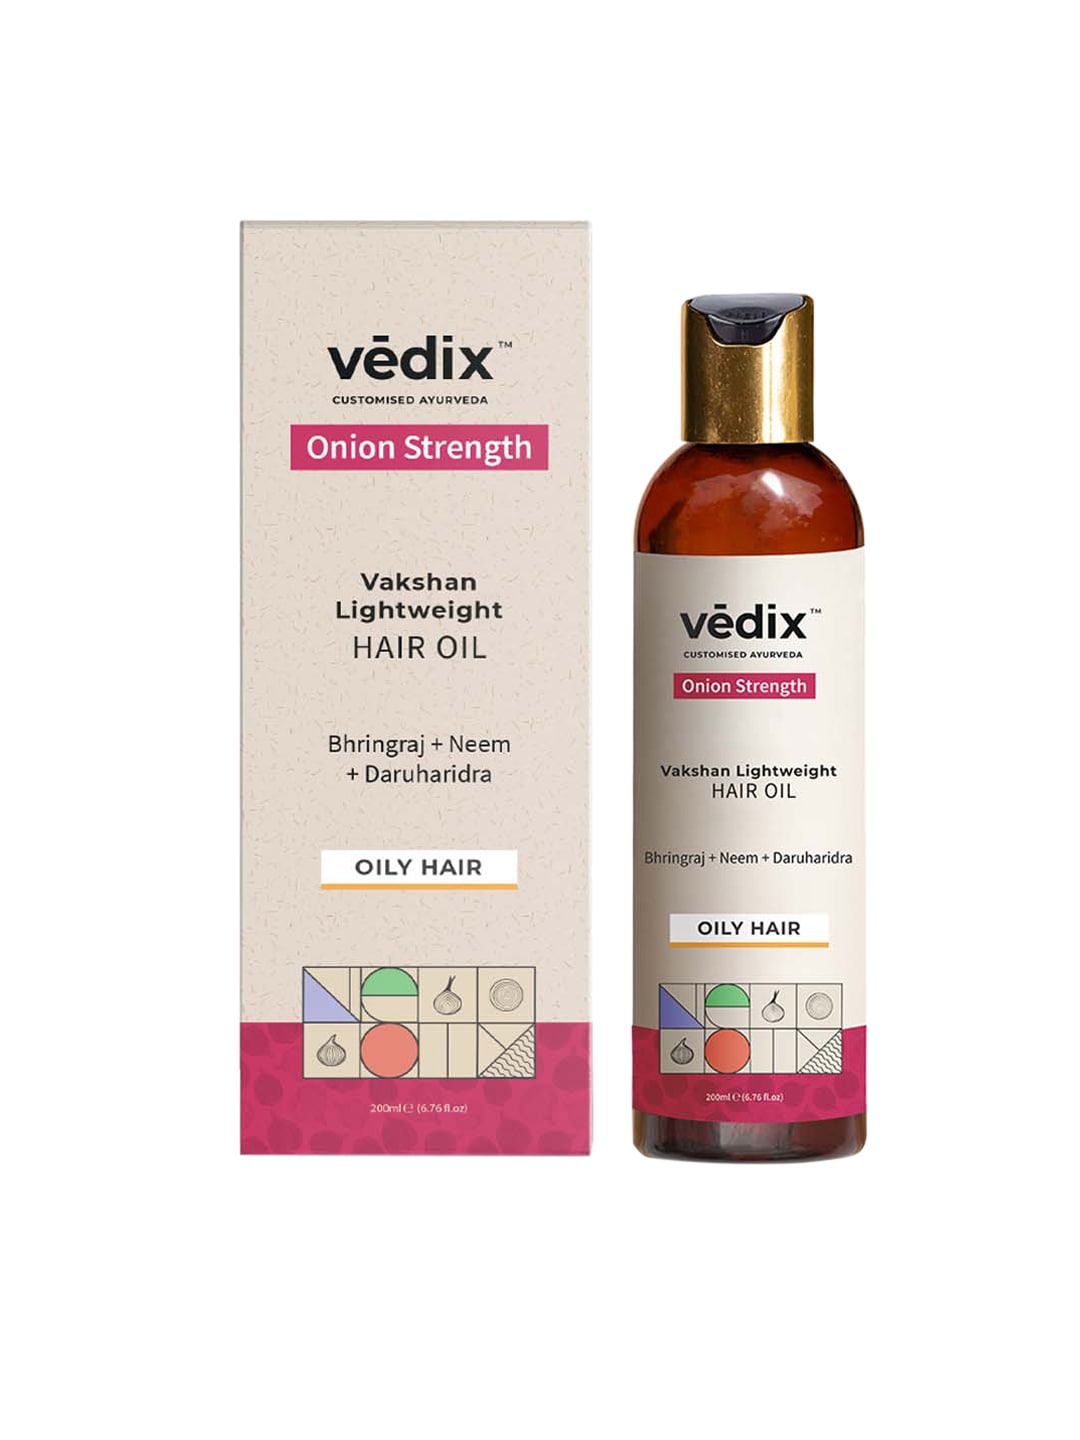 VEDIX Customized Ayurvedic Vakshan Lightweight Onion Hair Oil For Oily Hair 200 Ml Price in India